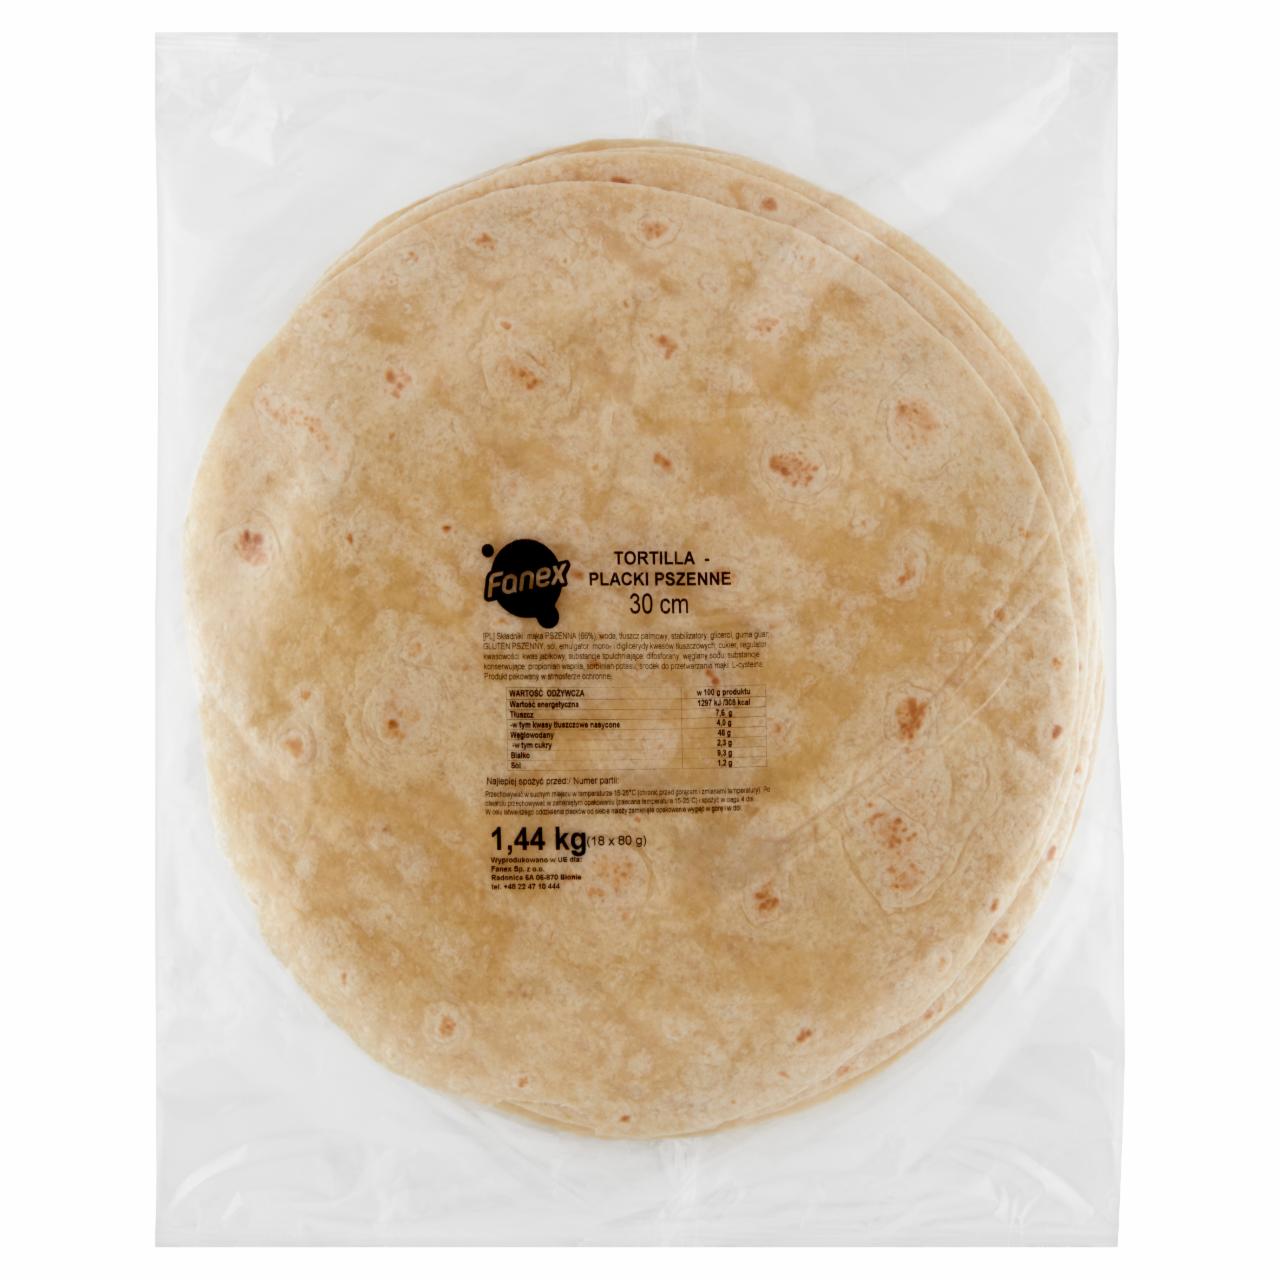 Zdjęcia - Fanex Tortilla placki pszenne 30 cm 1,44 kg (18 x 80 g)